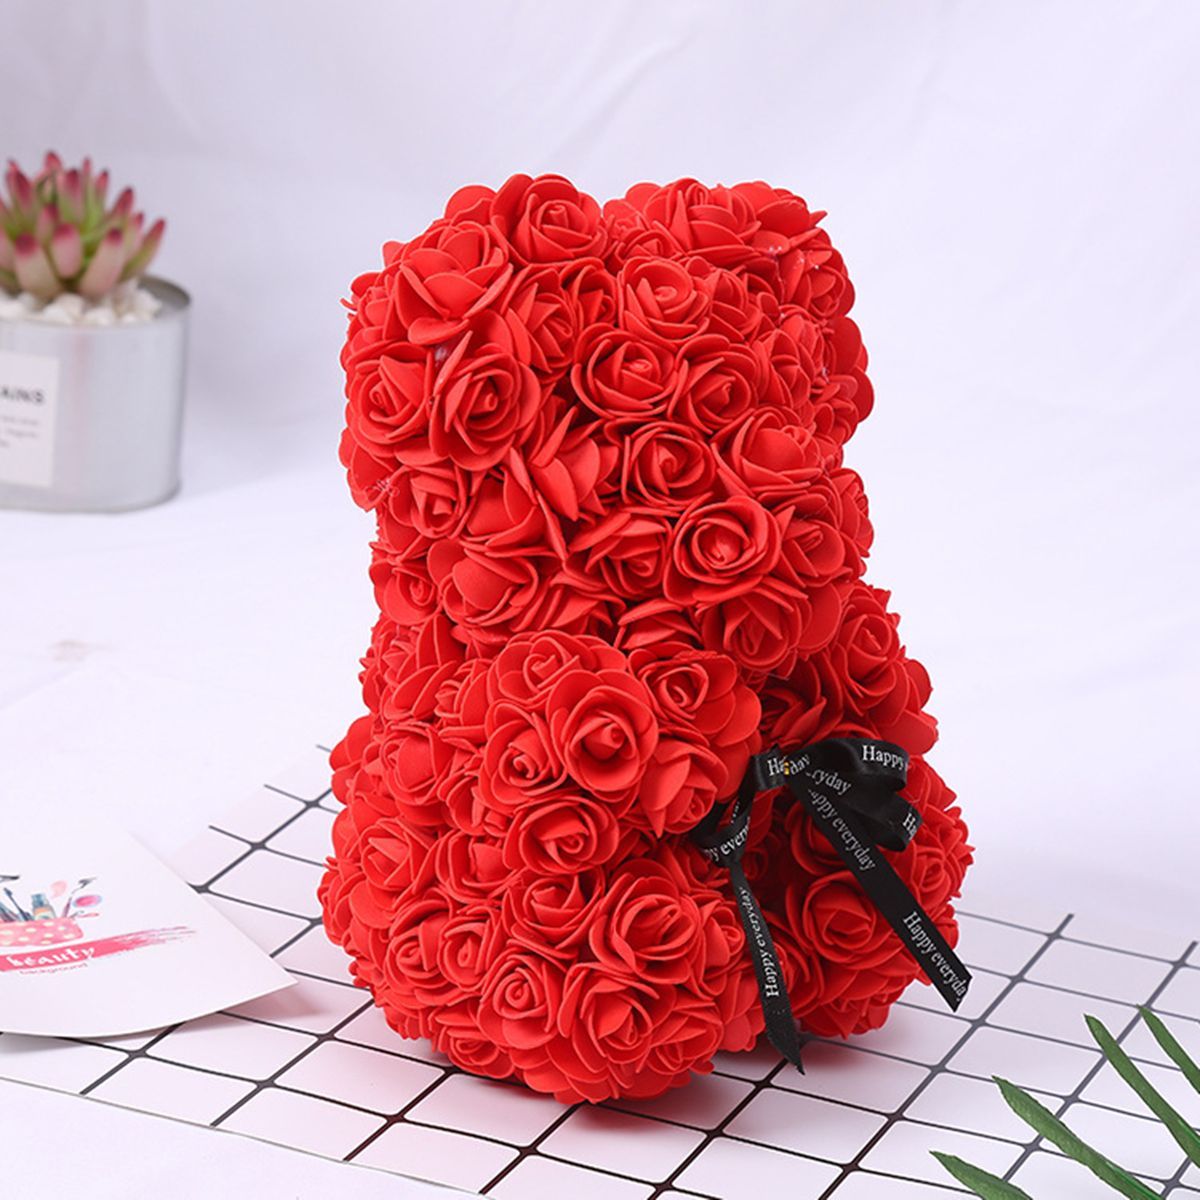 Artificial-Flowers-Rose-Bear-Plastic-Foam-Rose-Teddy-Bear-Valentines-Day-Gift-Birthday-Party-Decorat-1565921